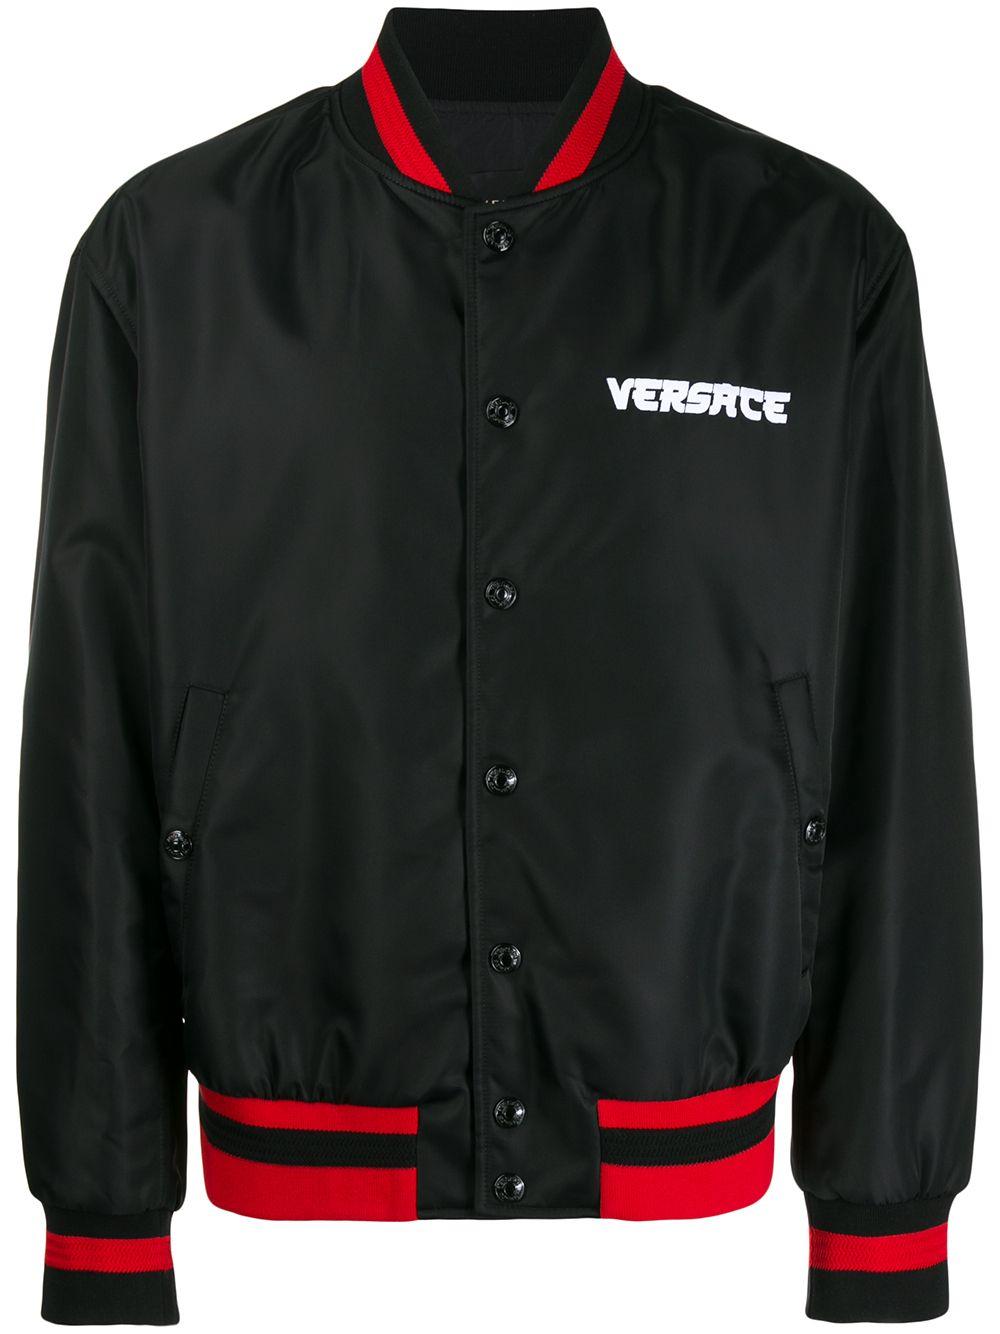 Versace Embroidered Medusa Bomber Jacket in Black for Men - Lyst